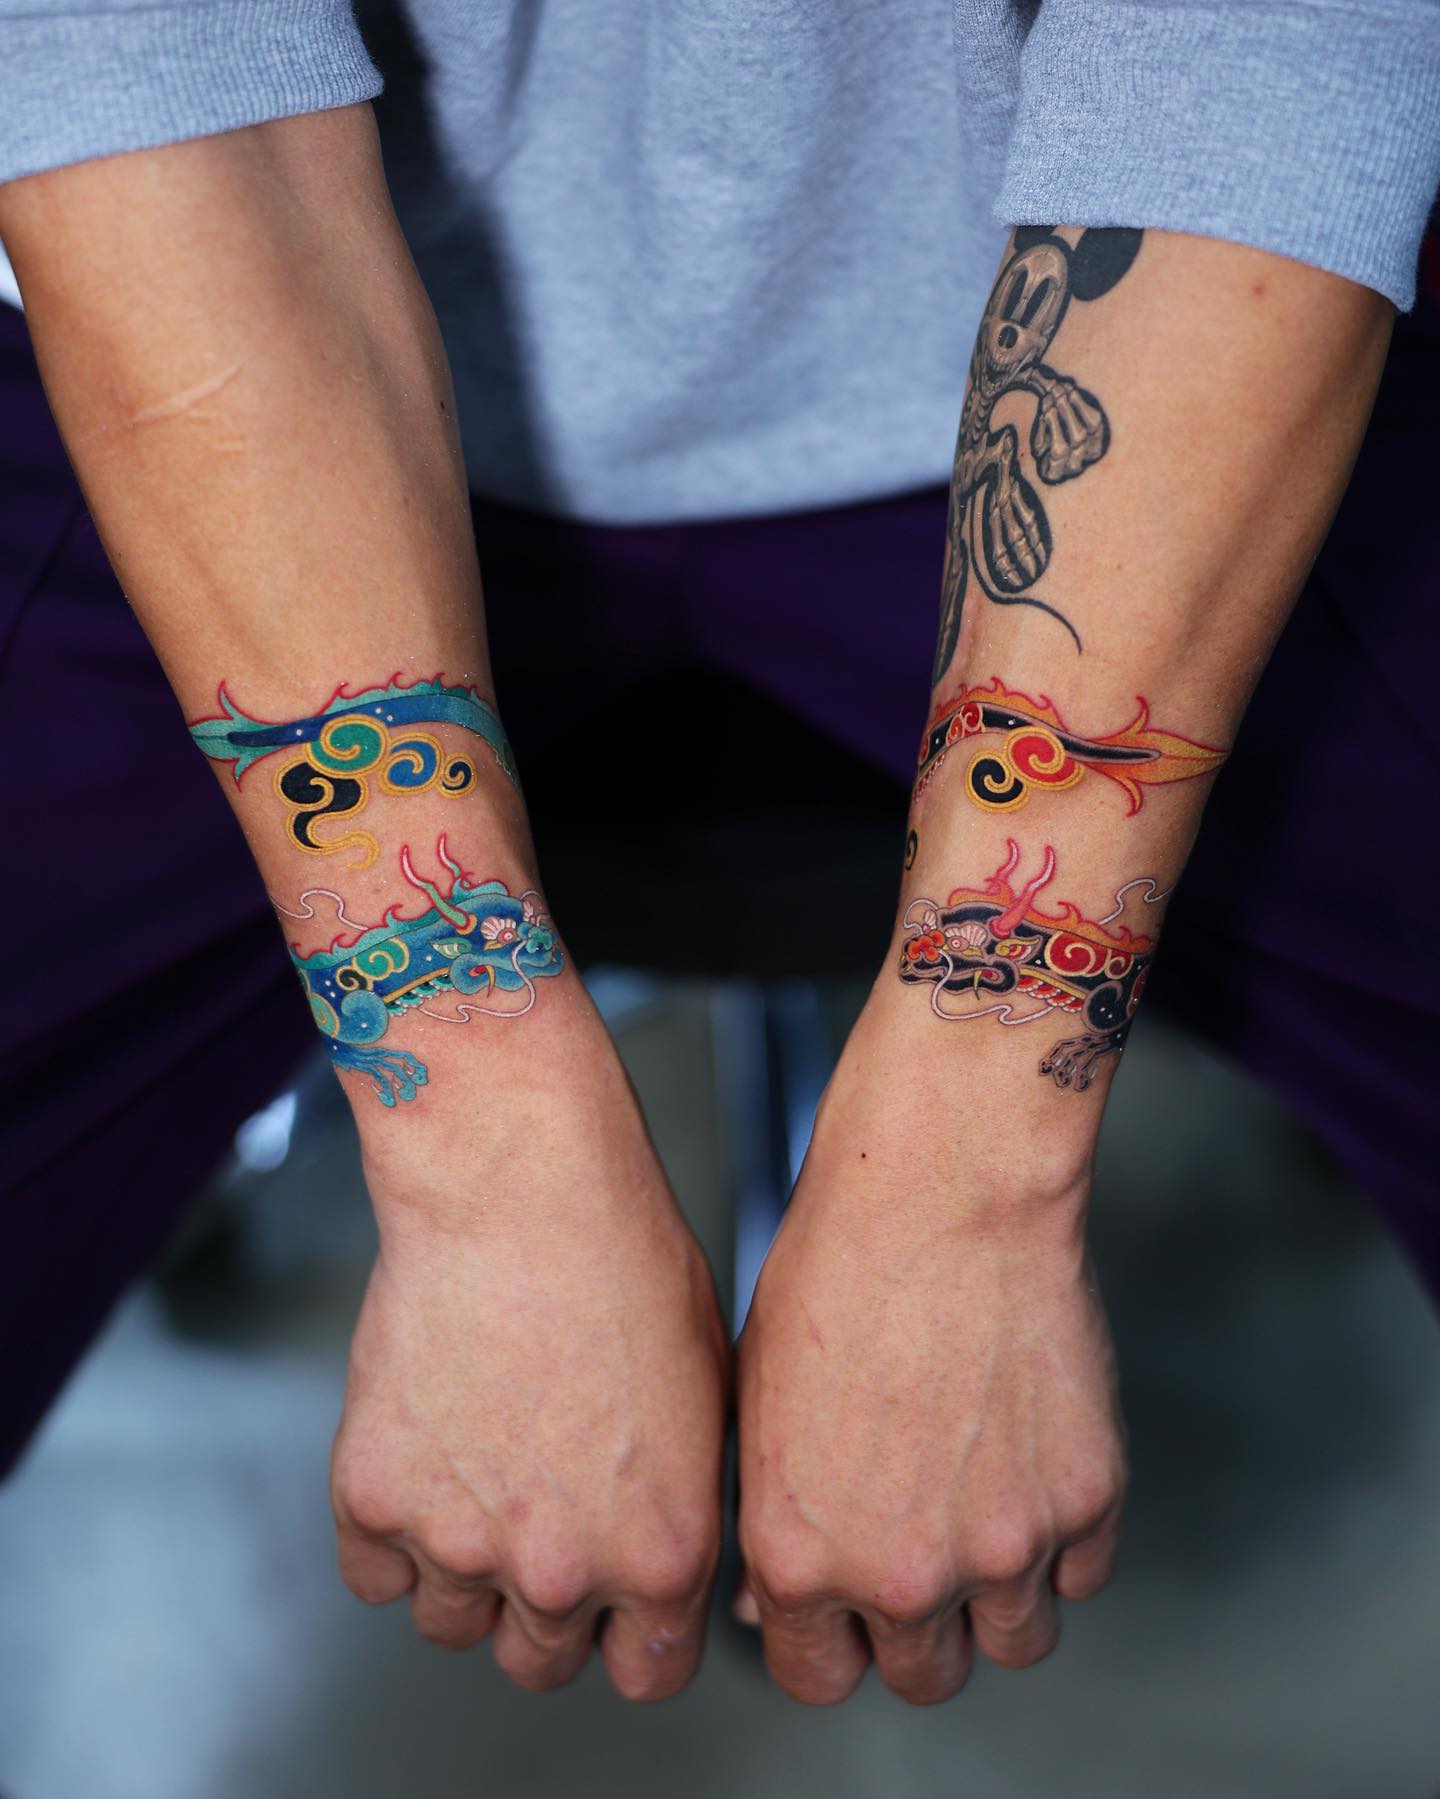 Sasi Wins tattoos - Wrist tattoo | Facebook